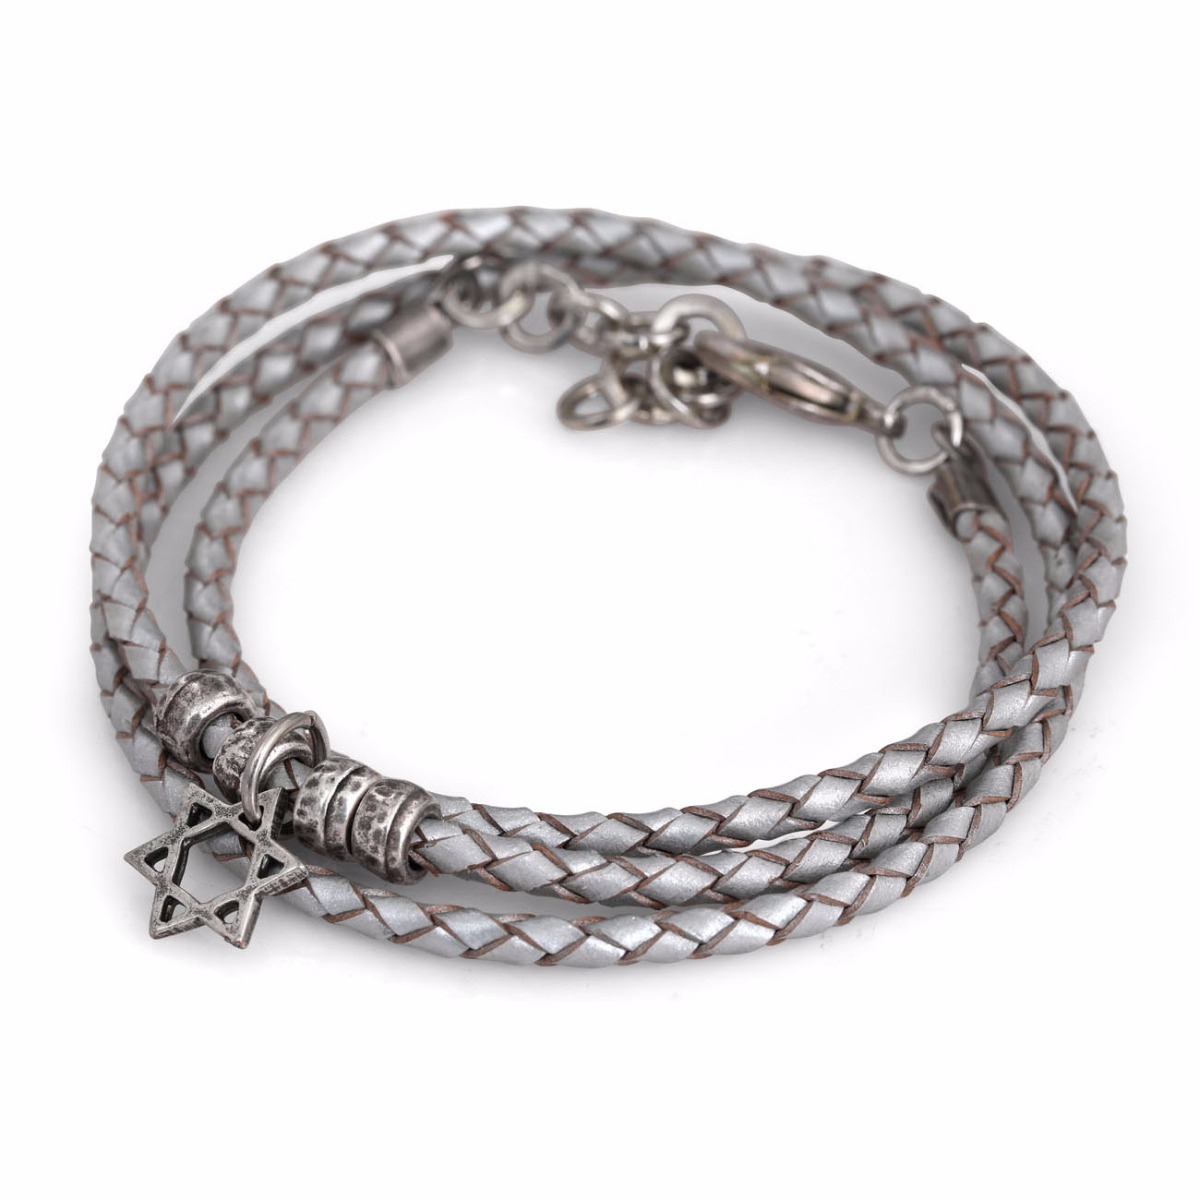 Galis Jewelry Double Wrap Gray Leather Men’s Bracelet with Star of David - 1